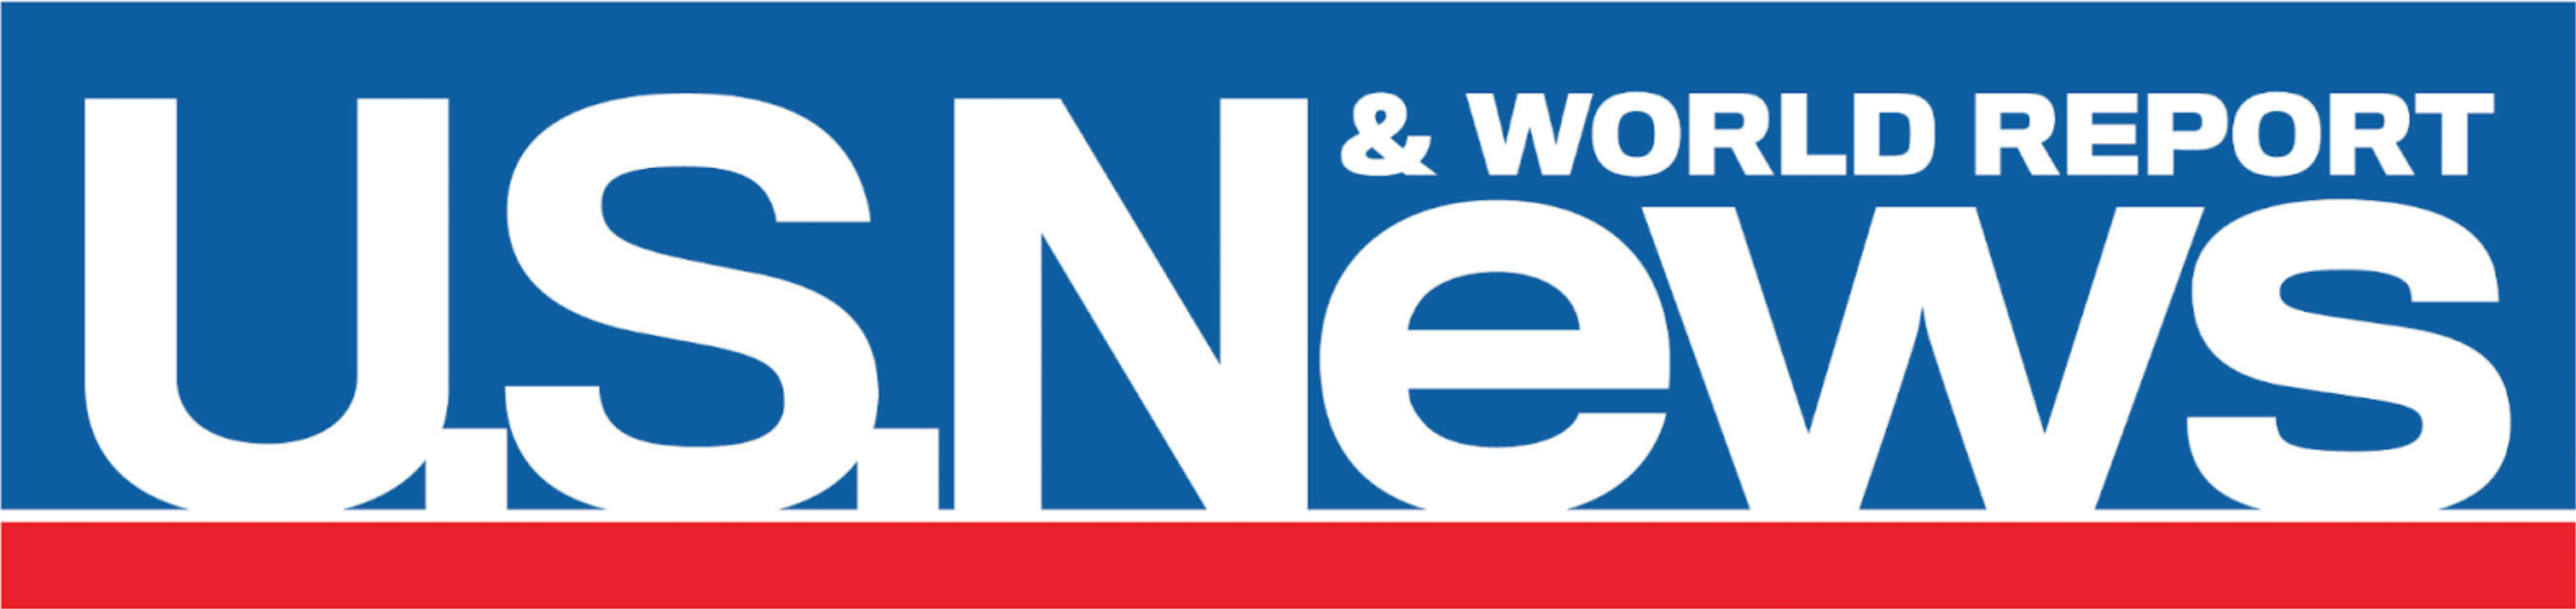 us-news-logo